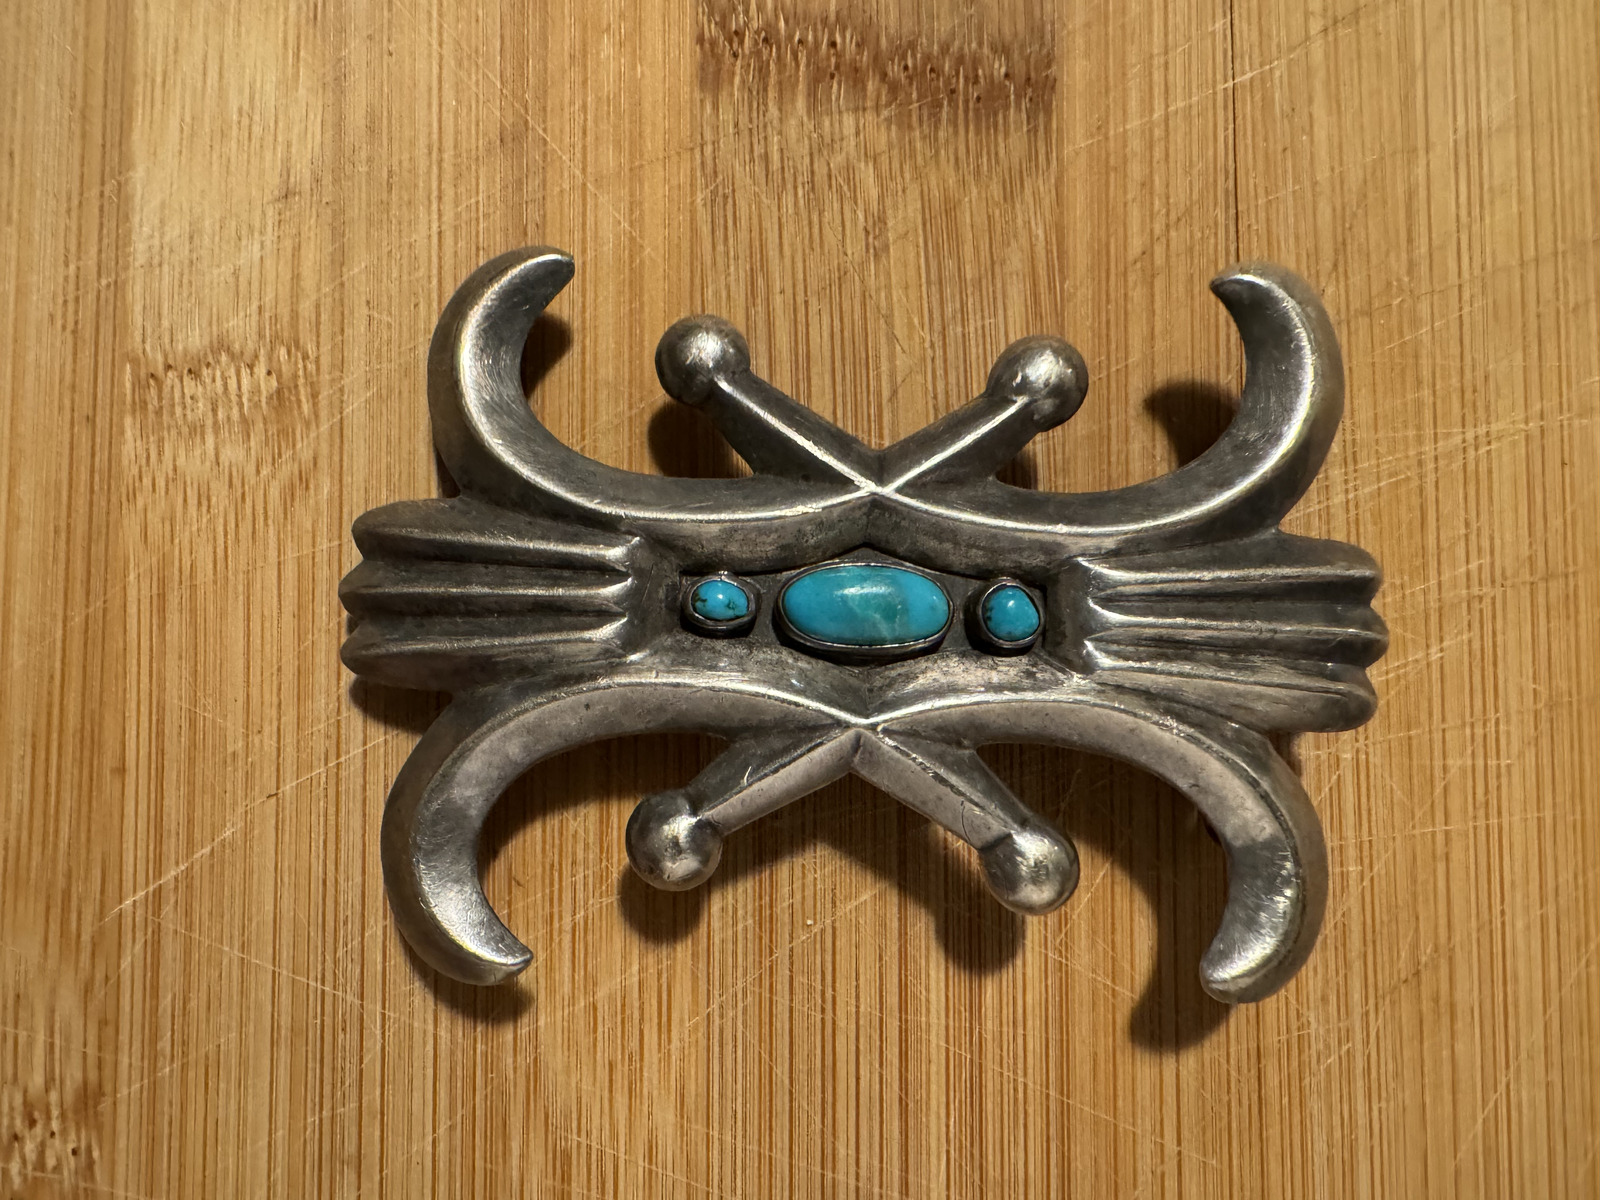 VTG Native American Silver Sandcast Turquoise Belt Buckle - signed: Azgay